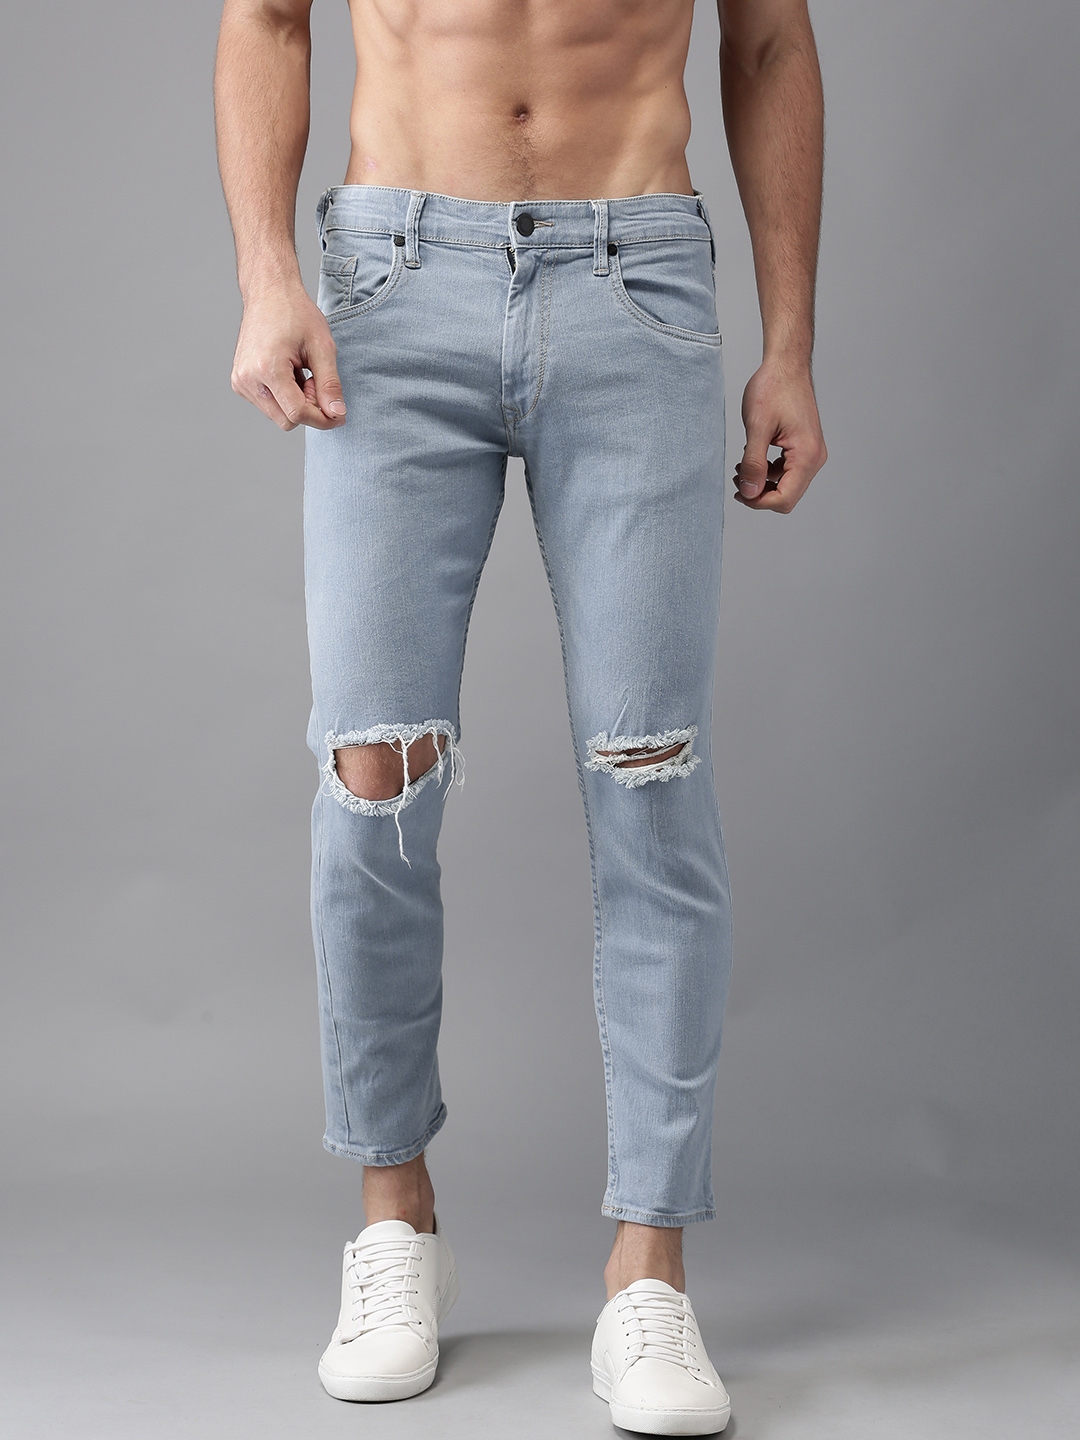 slim fit cropped jeans mens